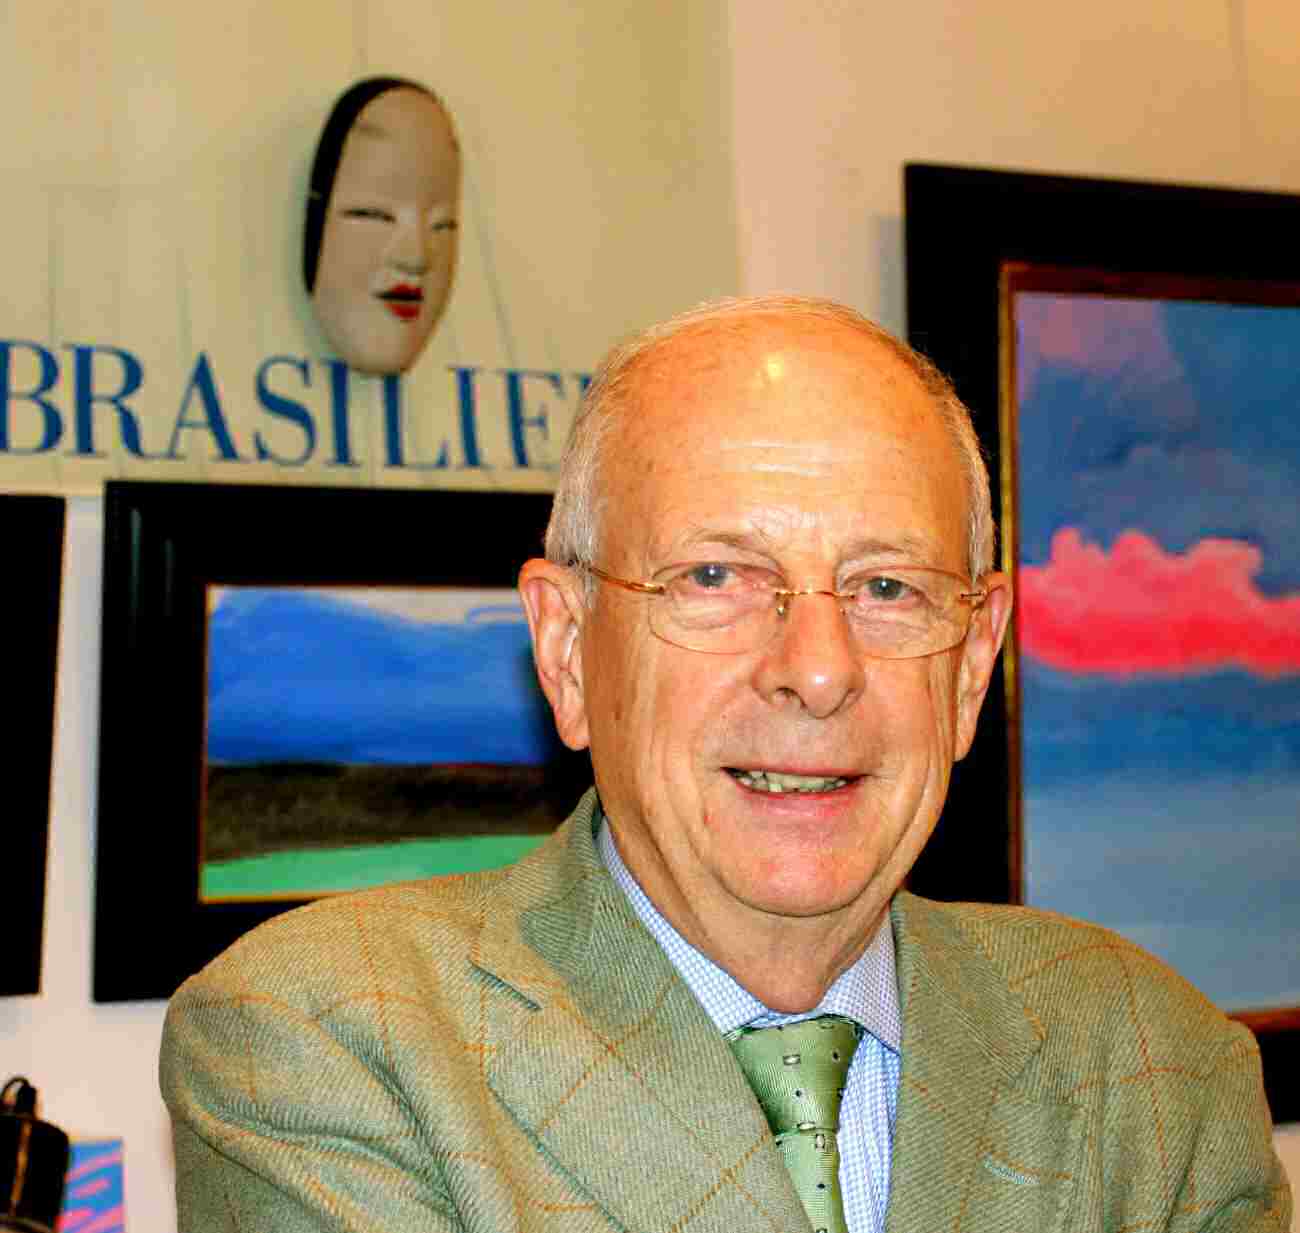 Brasilier, artiste peintre, portrait